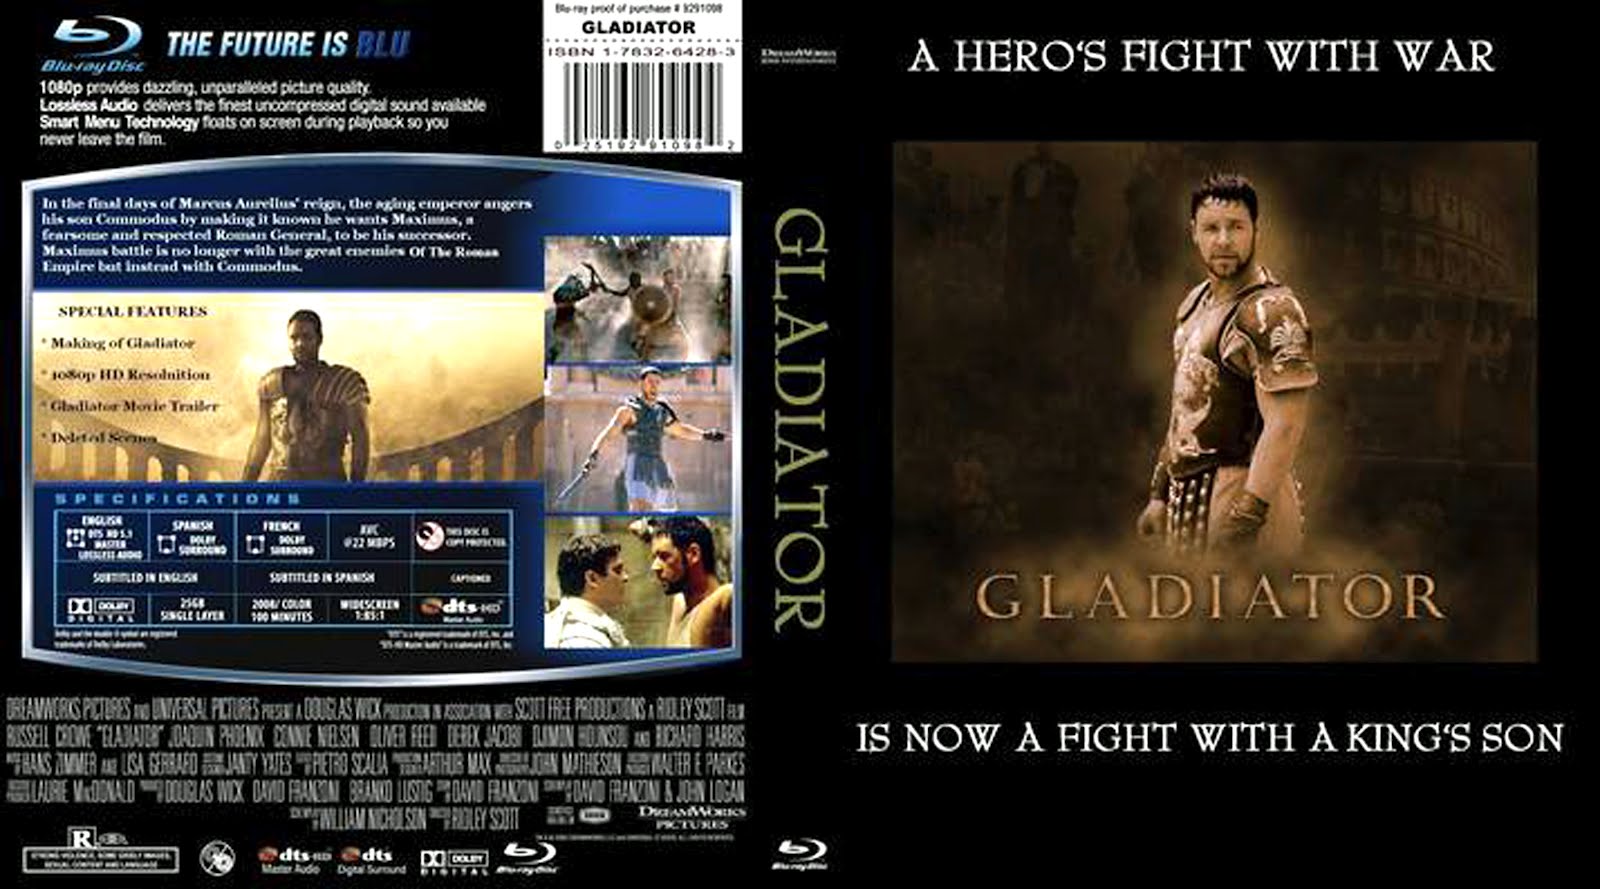 Гладиатор [Gladiator] 2000 Cover BLURAY. Гладиатор 2000 Постер. Последний Гладиатор 2003 DVD обложка. Jann Gladiator обложка.